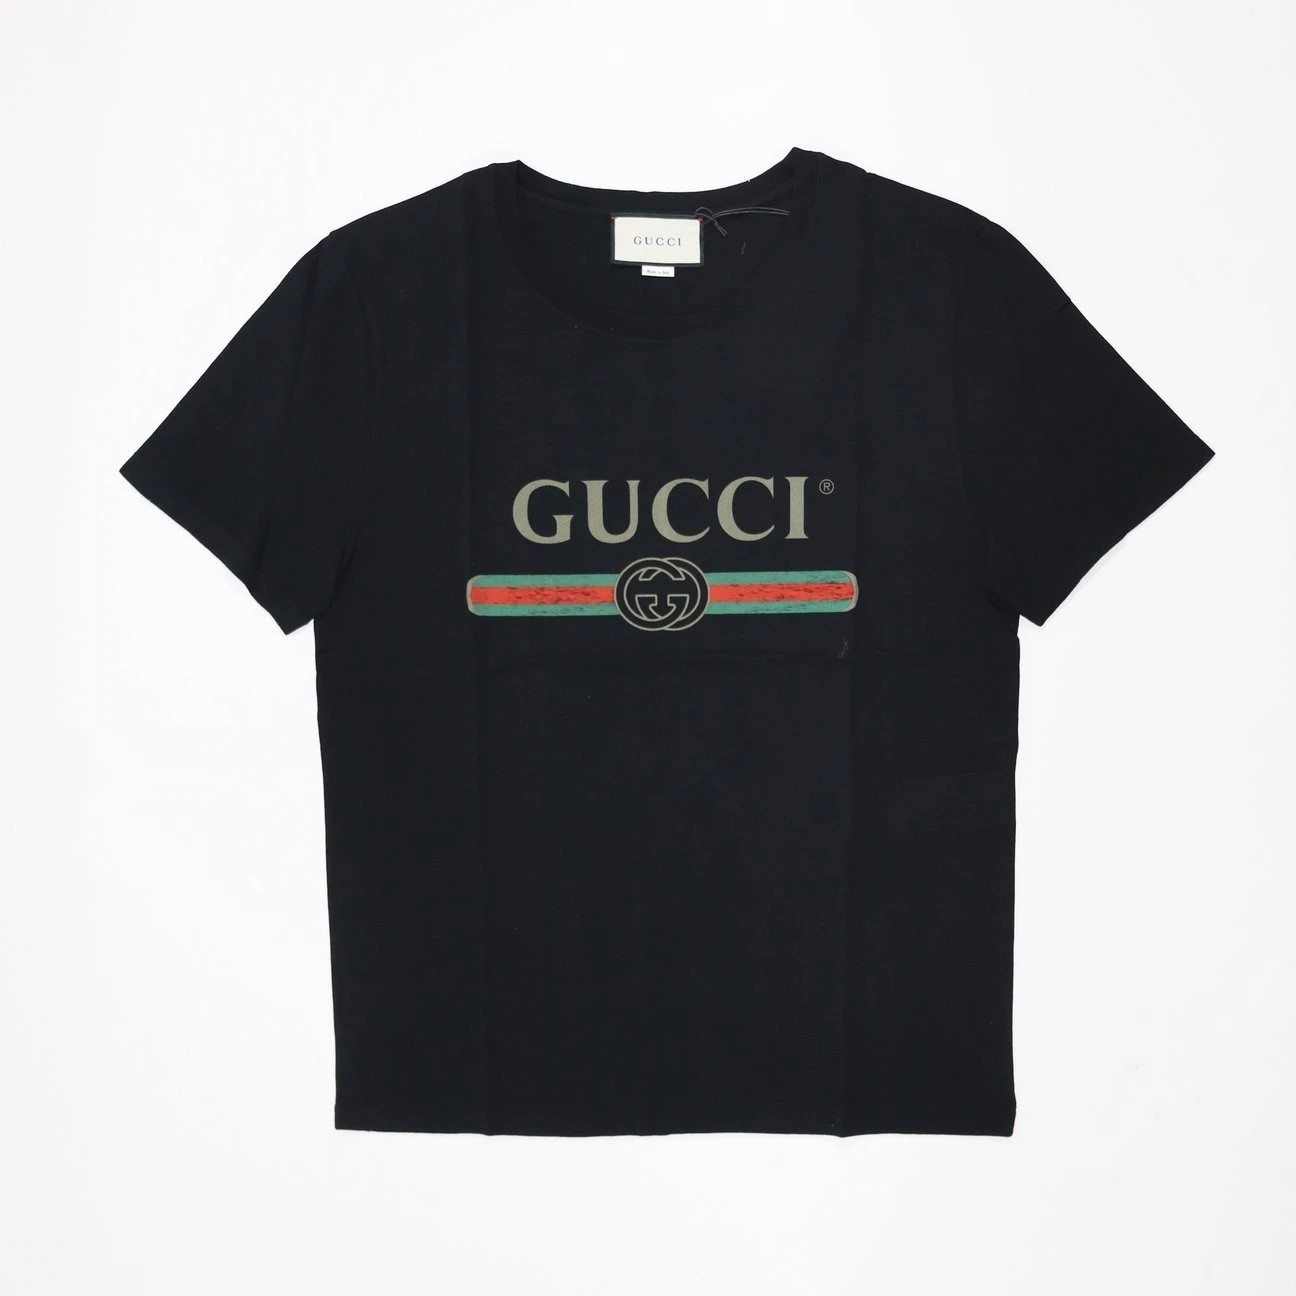 gucci vintage logo t shirt